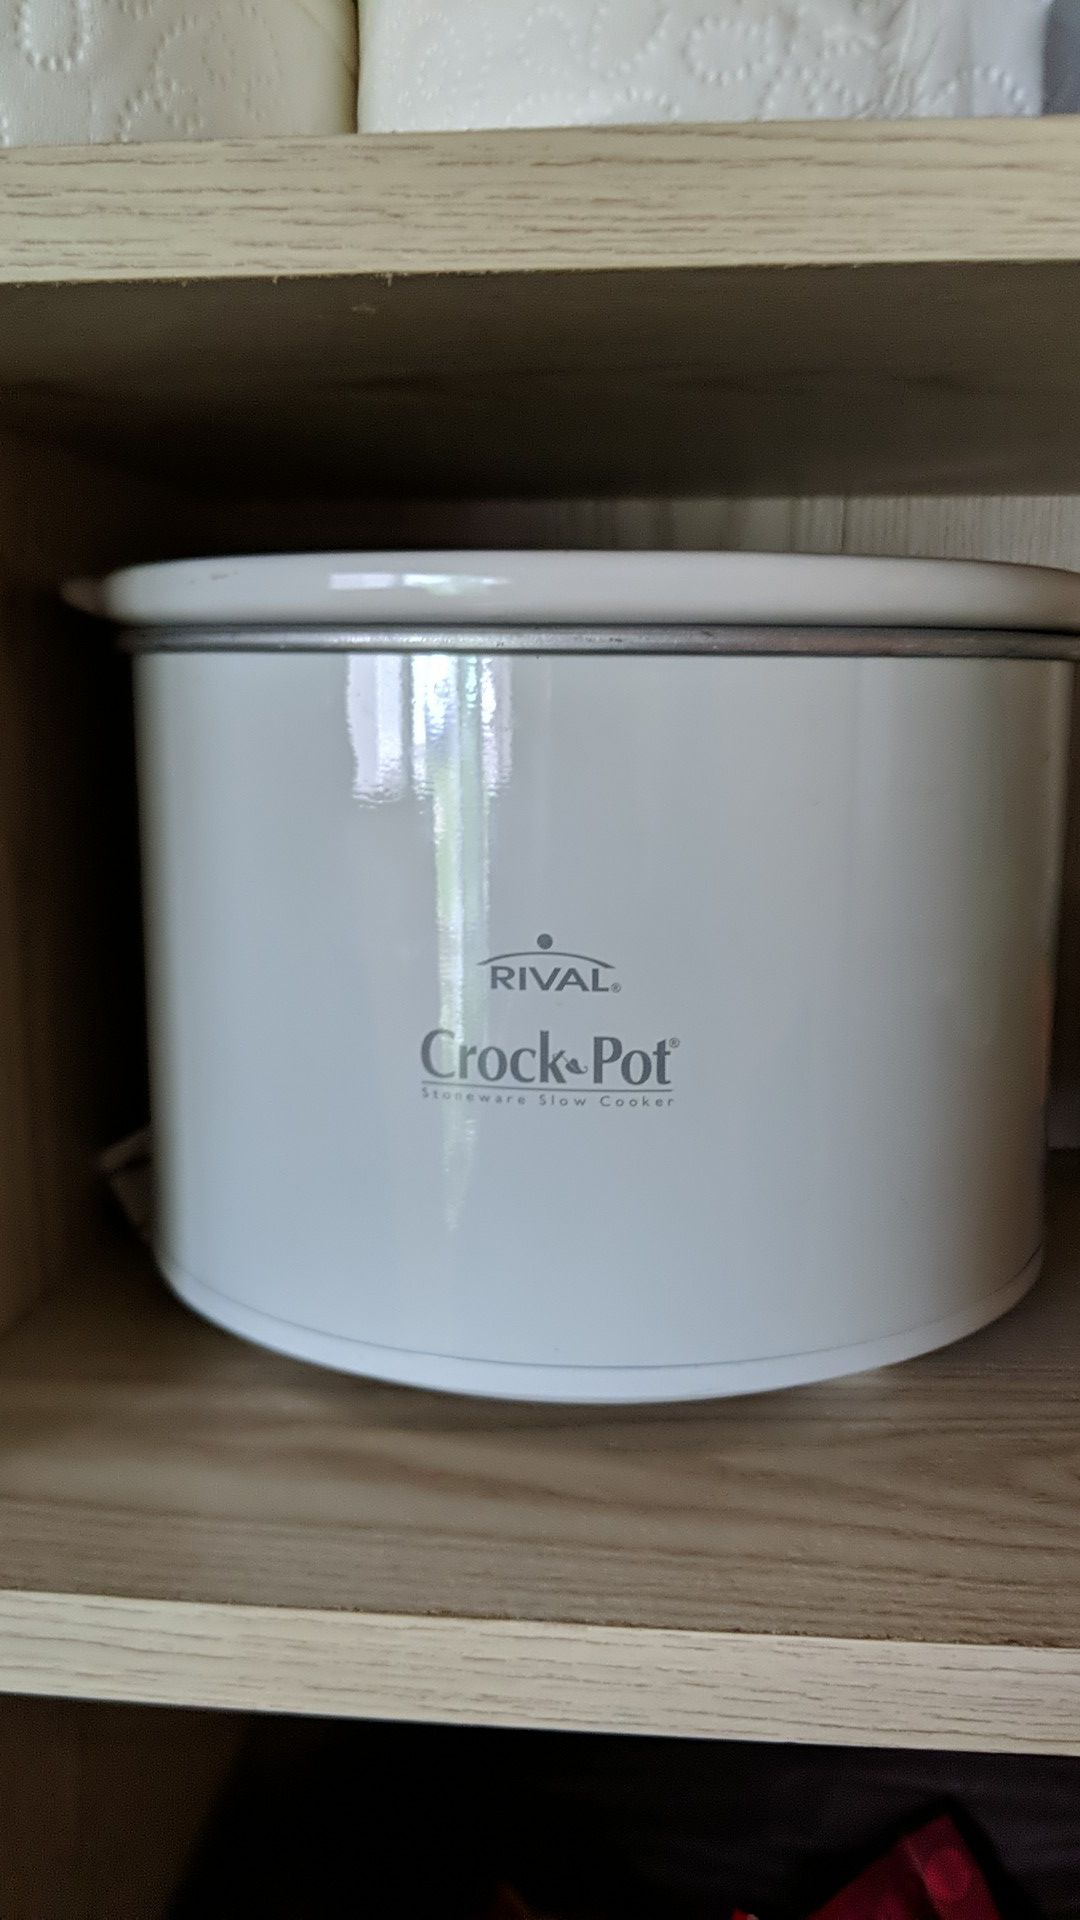 Small individual crock pot